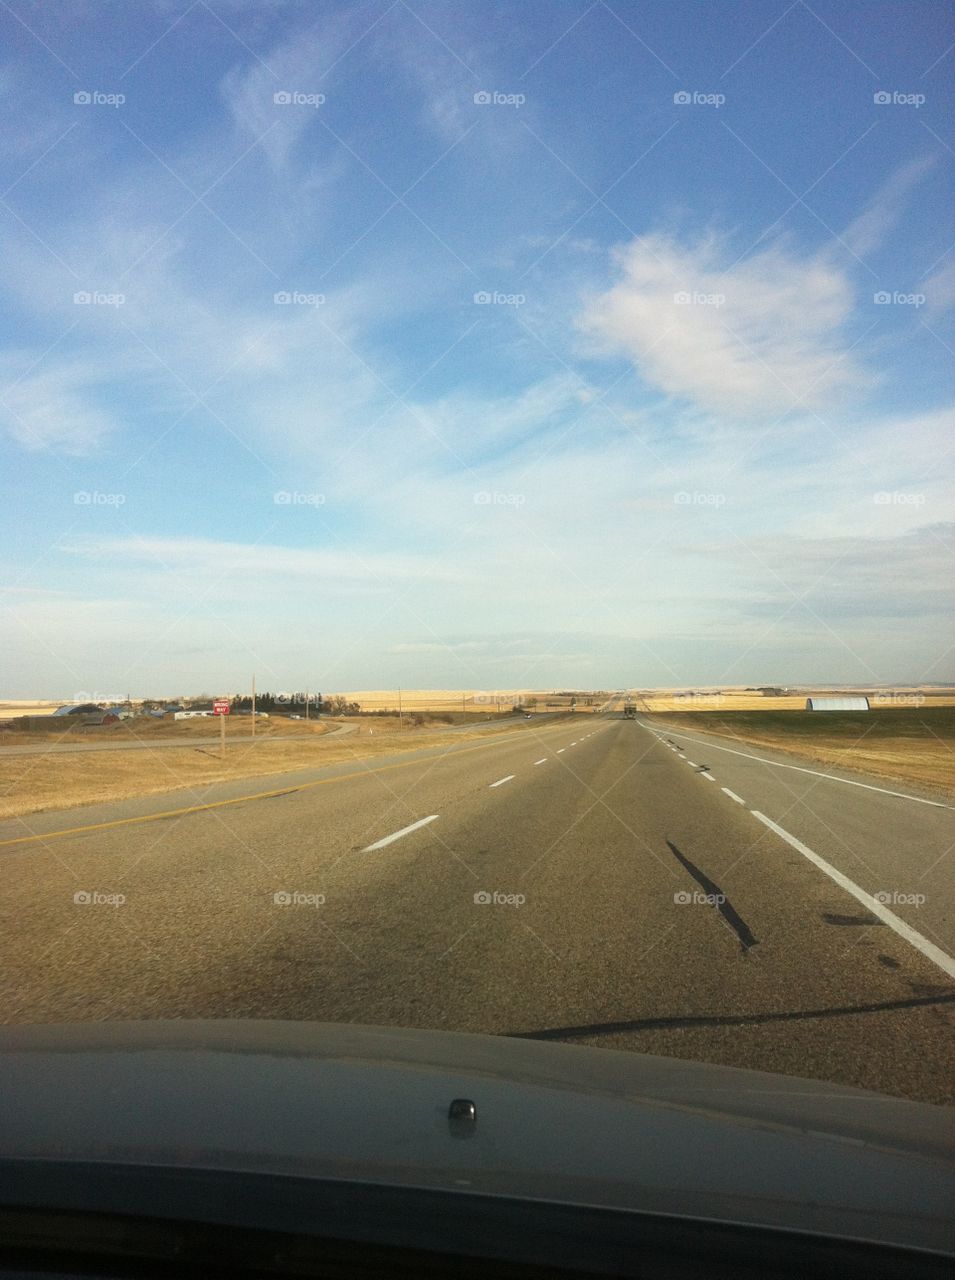 Prairie travels, straight as far as you can see.